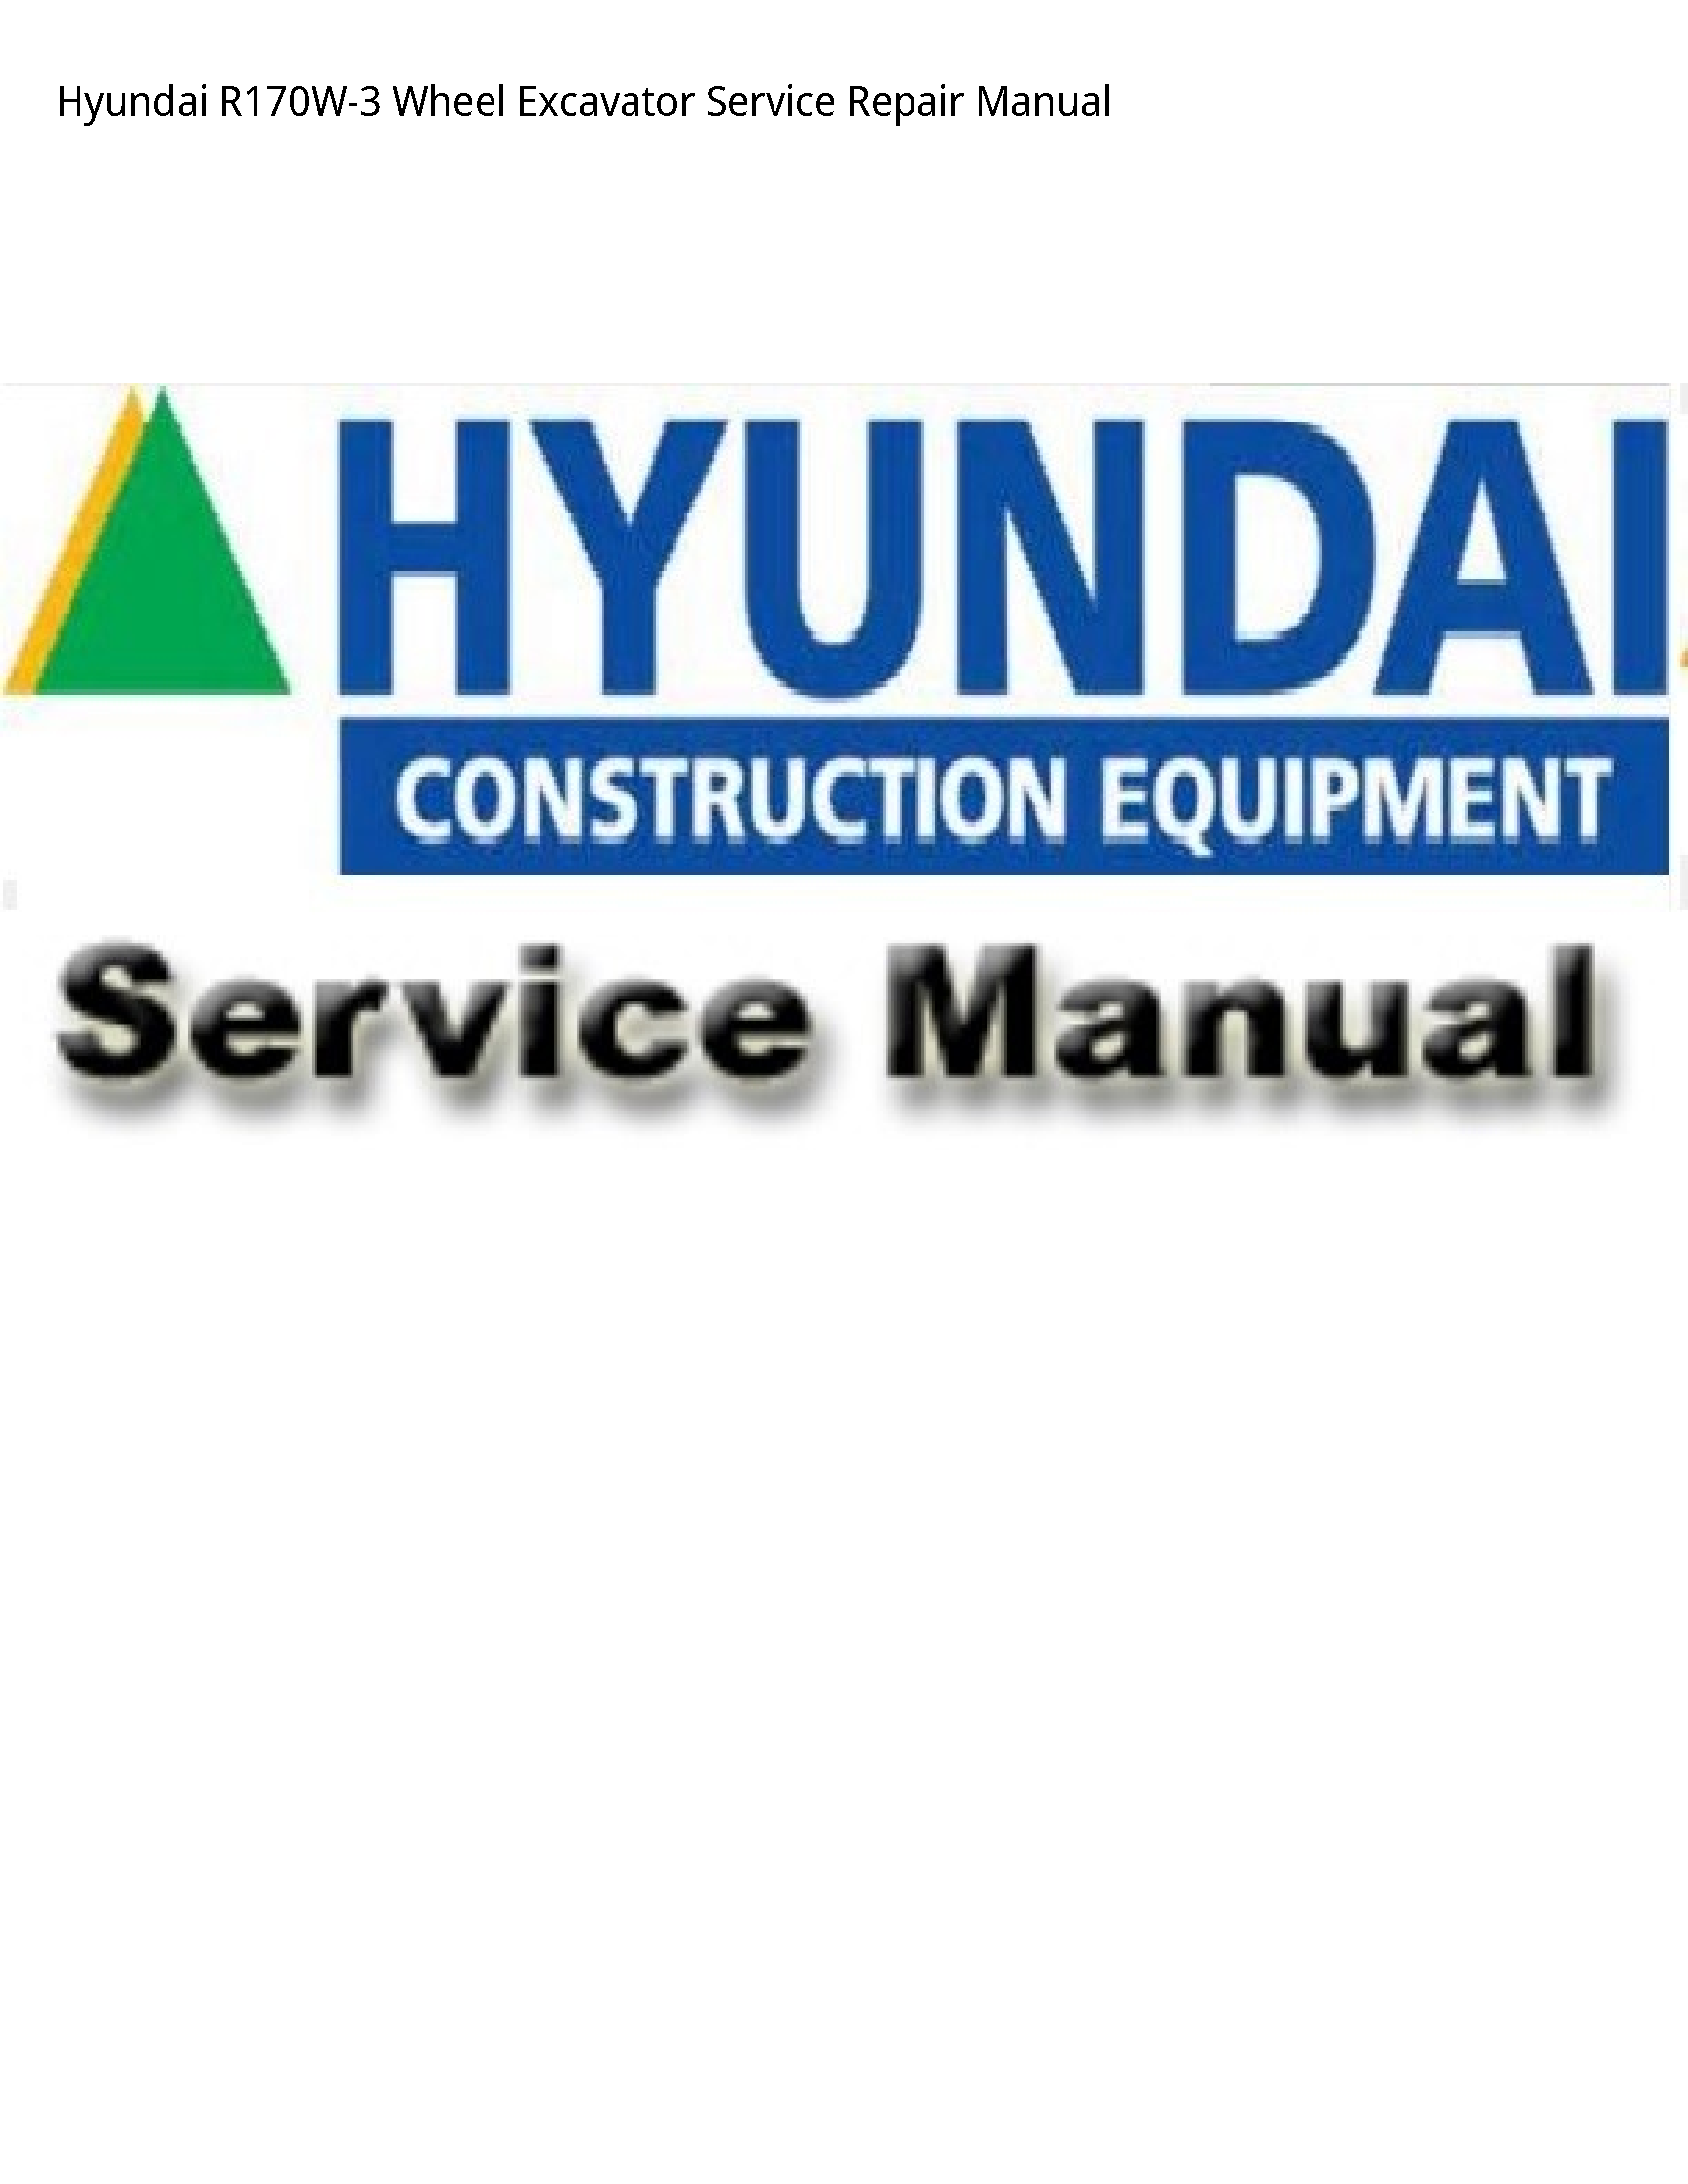 Hyundai R170W-3 Wheel Excavator manual